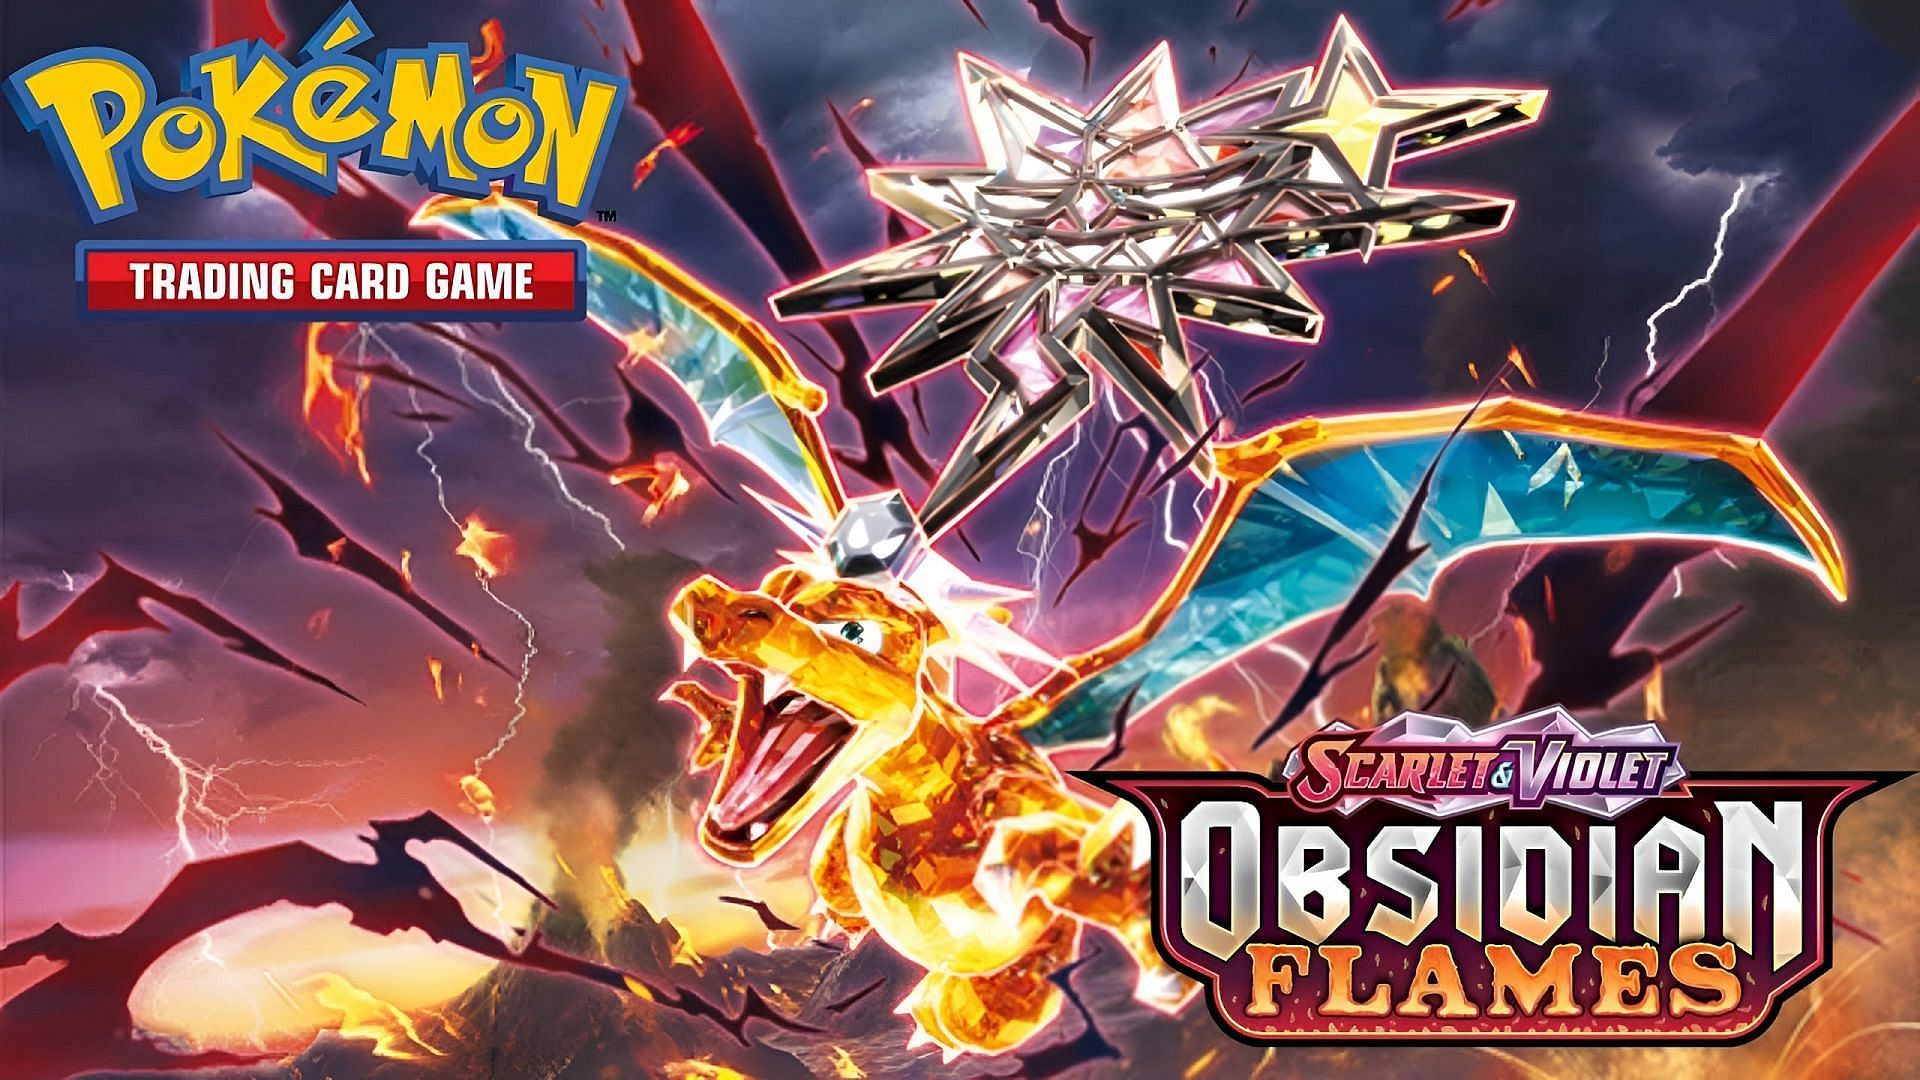 Miraidon ex is back! (Obsidian Flames Gameplay) 